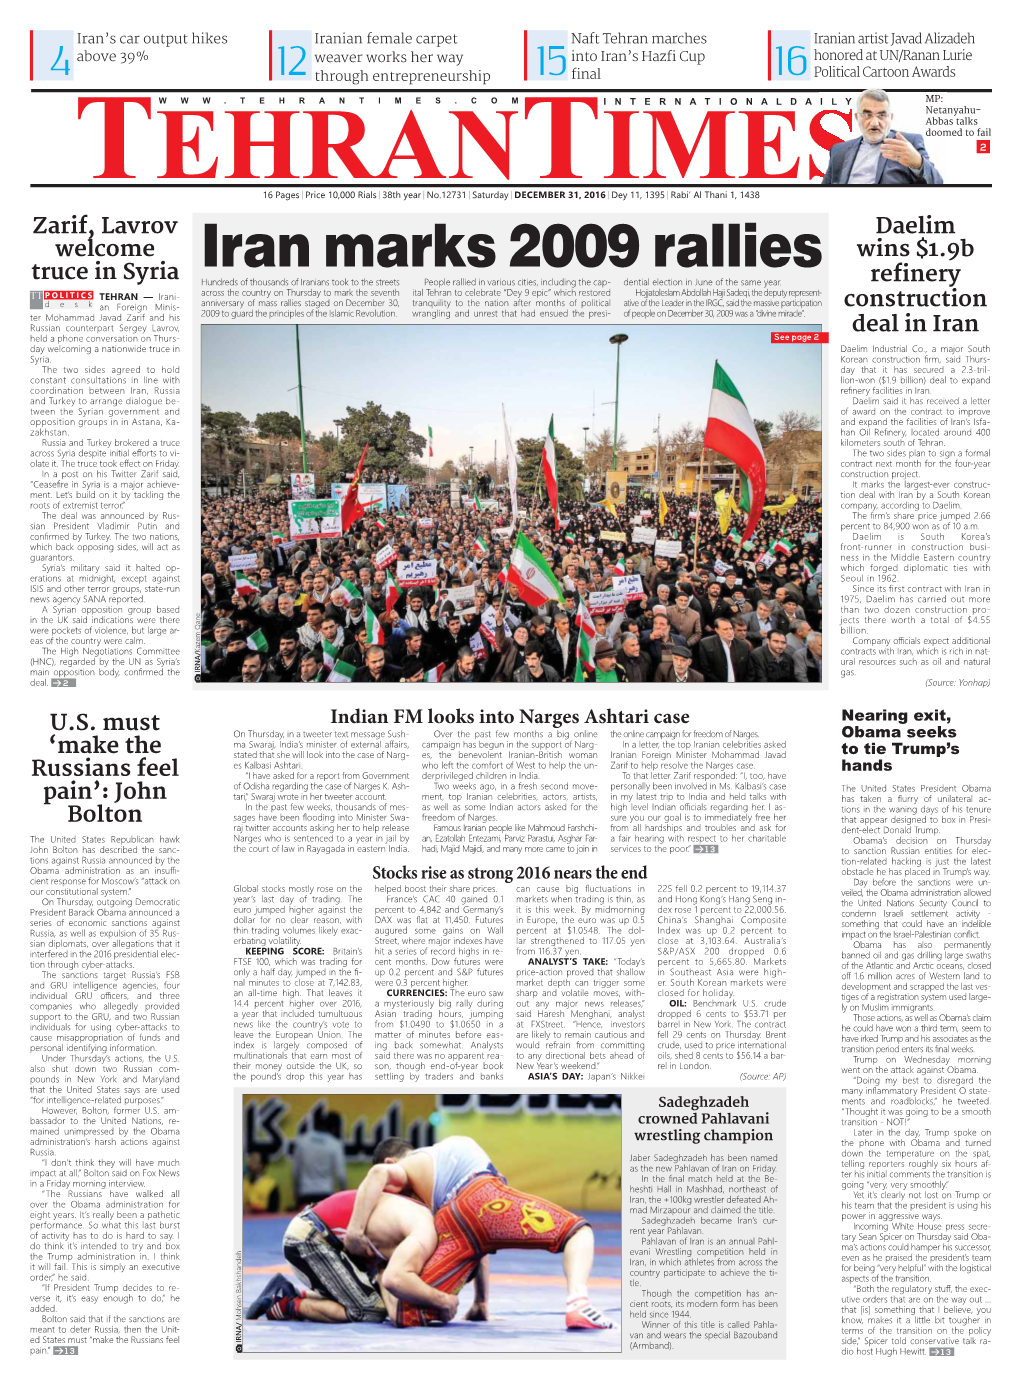 Iran Marks 2009 Rallies